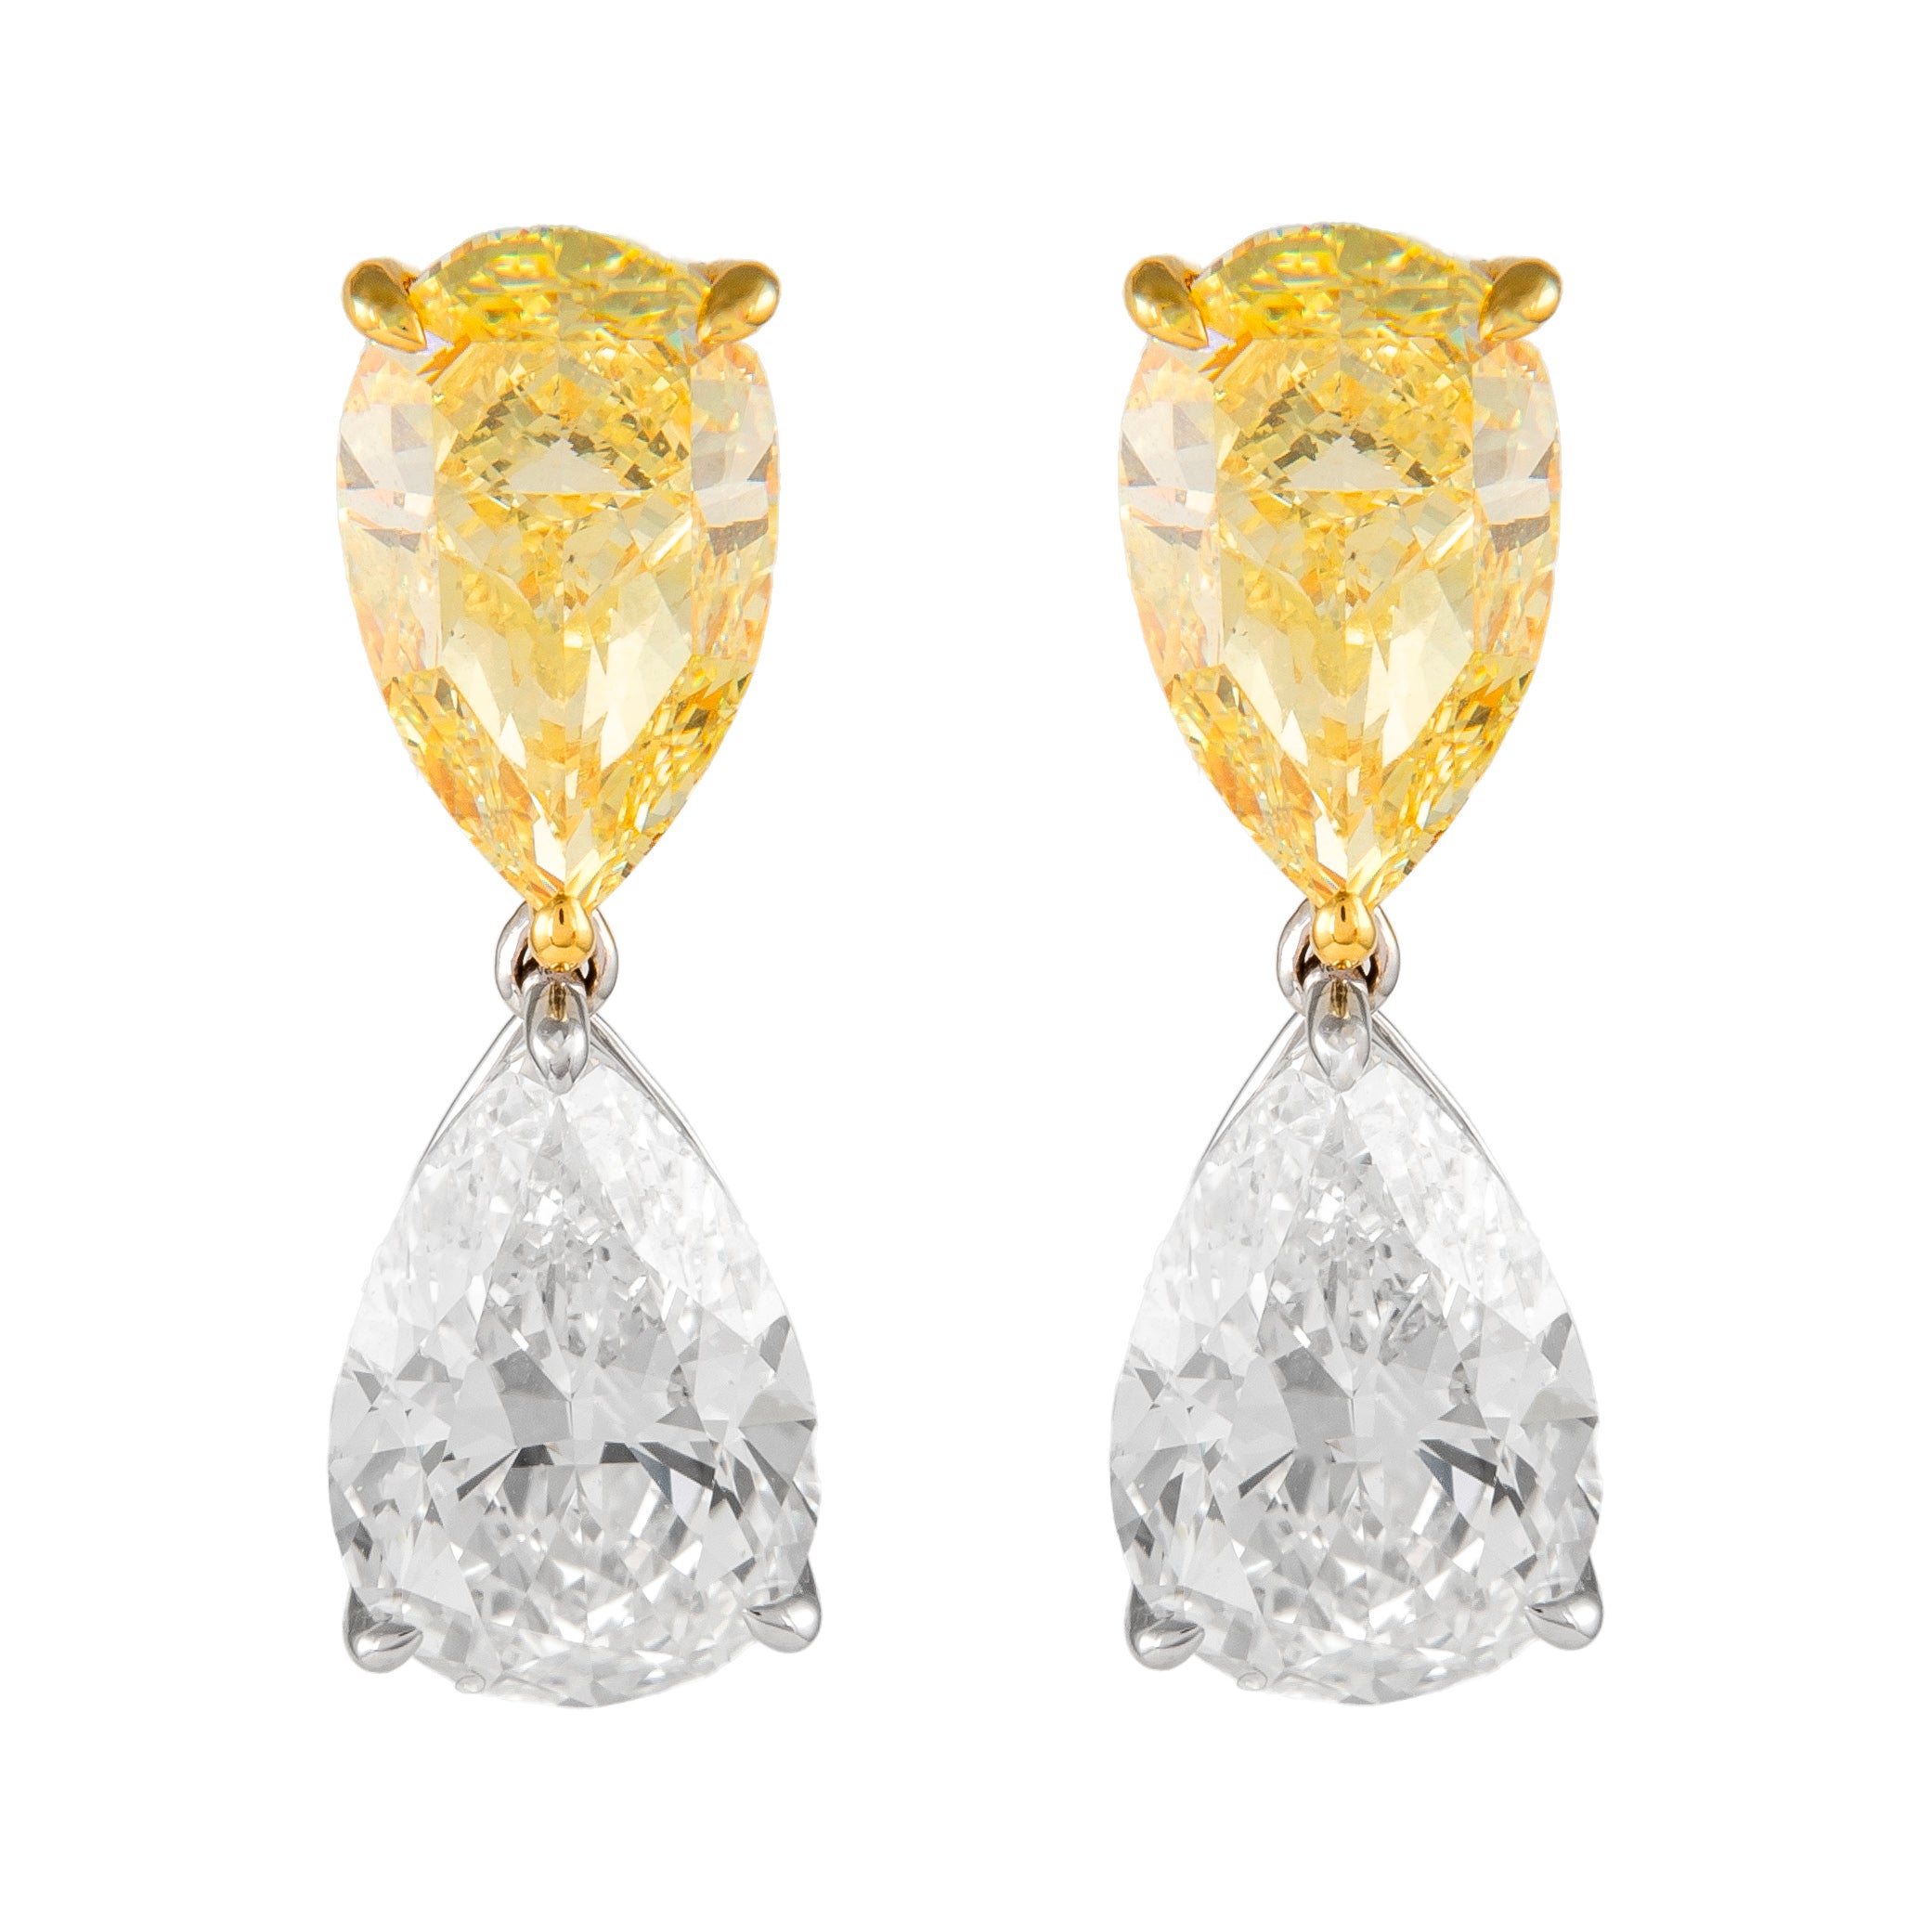 Alexander GIA  18.15ct Fancy Intense Yellow DIamond & White Diamond Earrings 18k